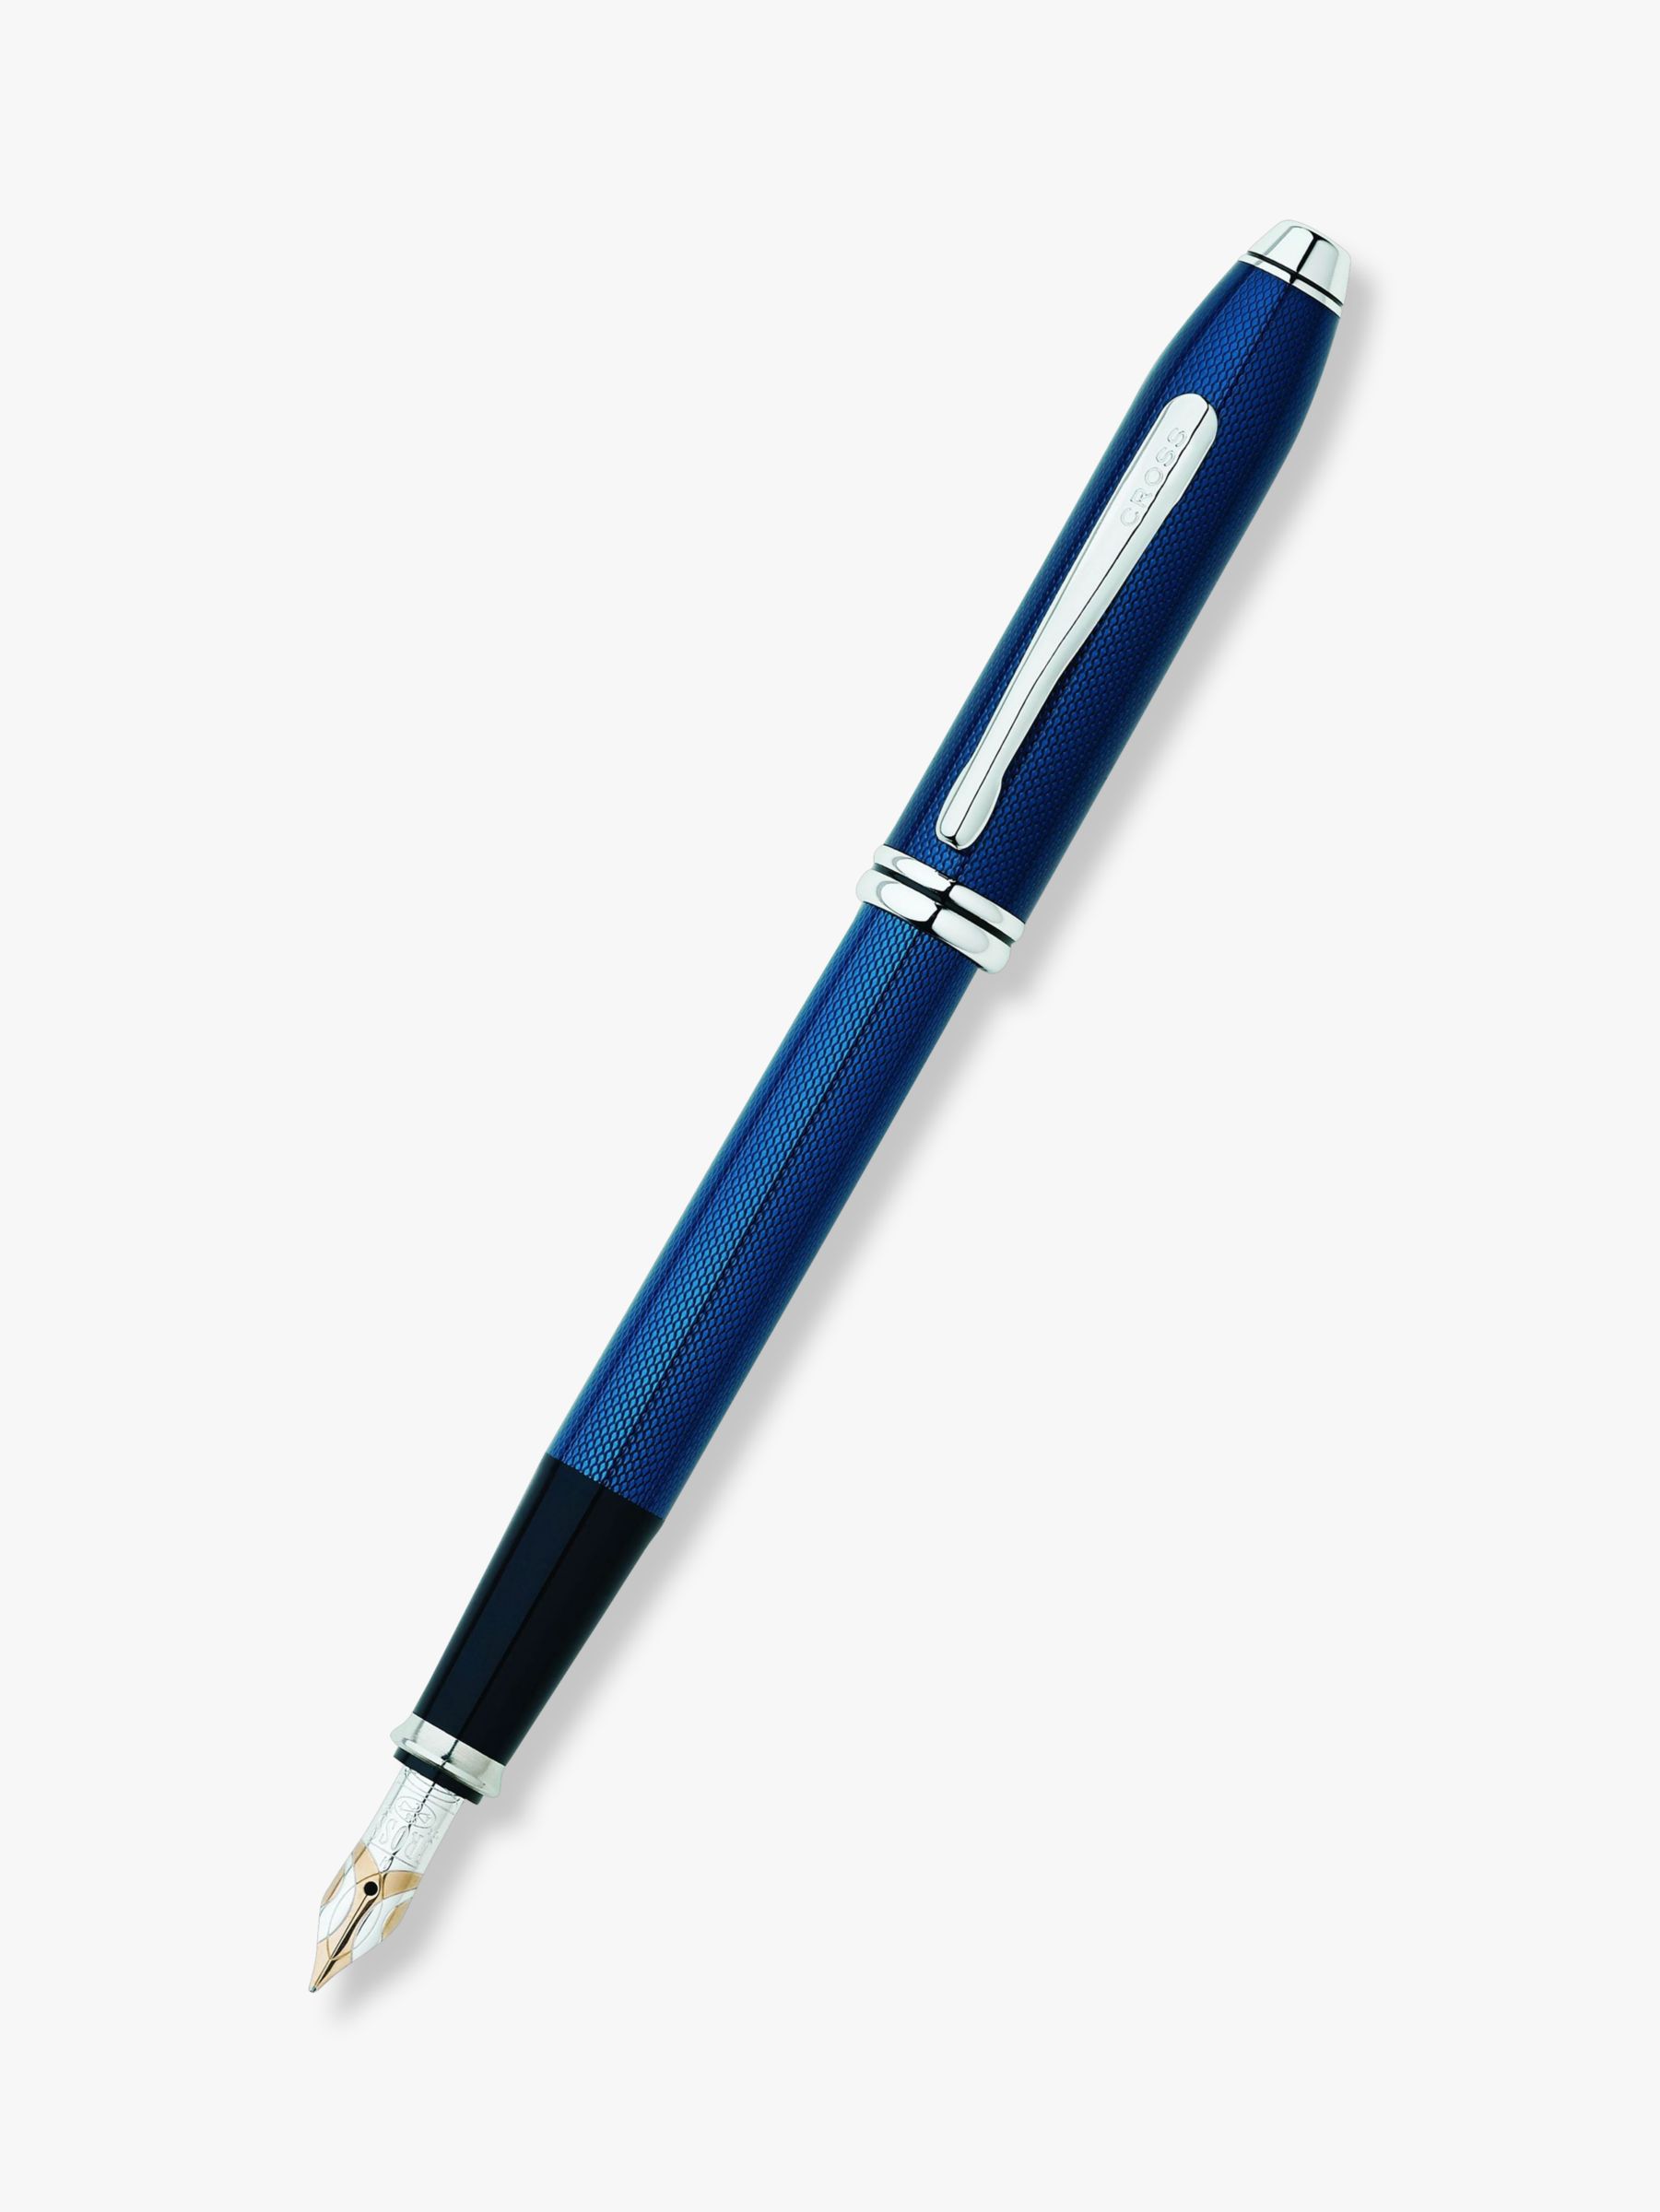 Cross Townsend Fountain Pen, Quartz Blue